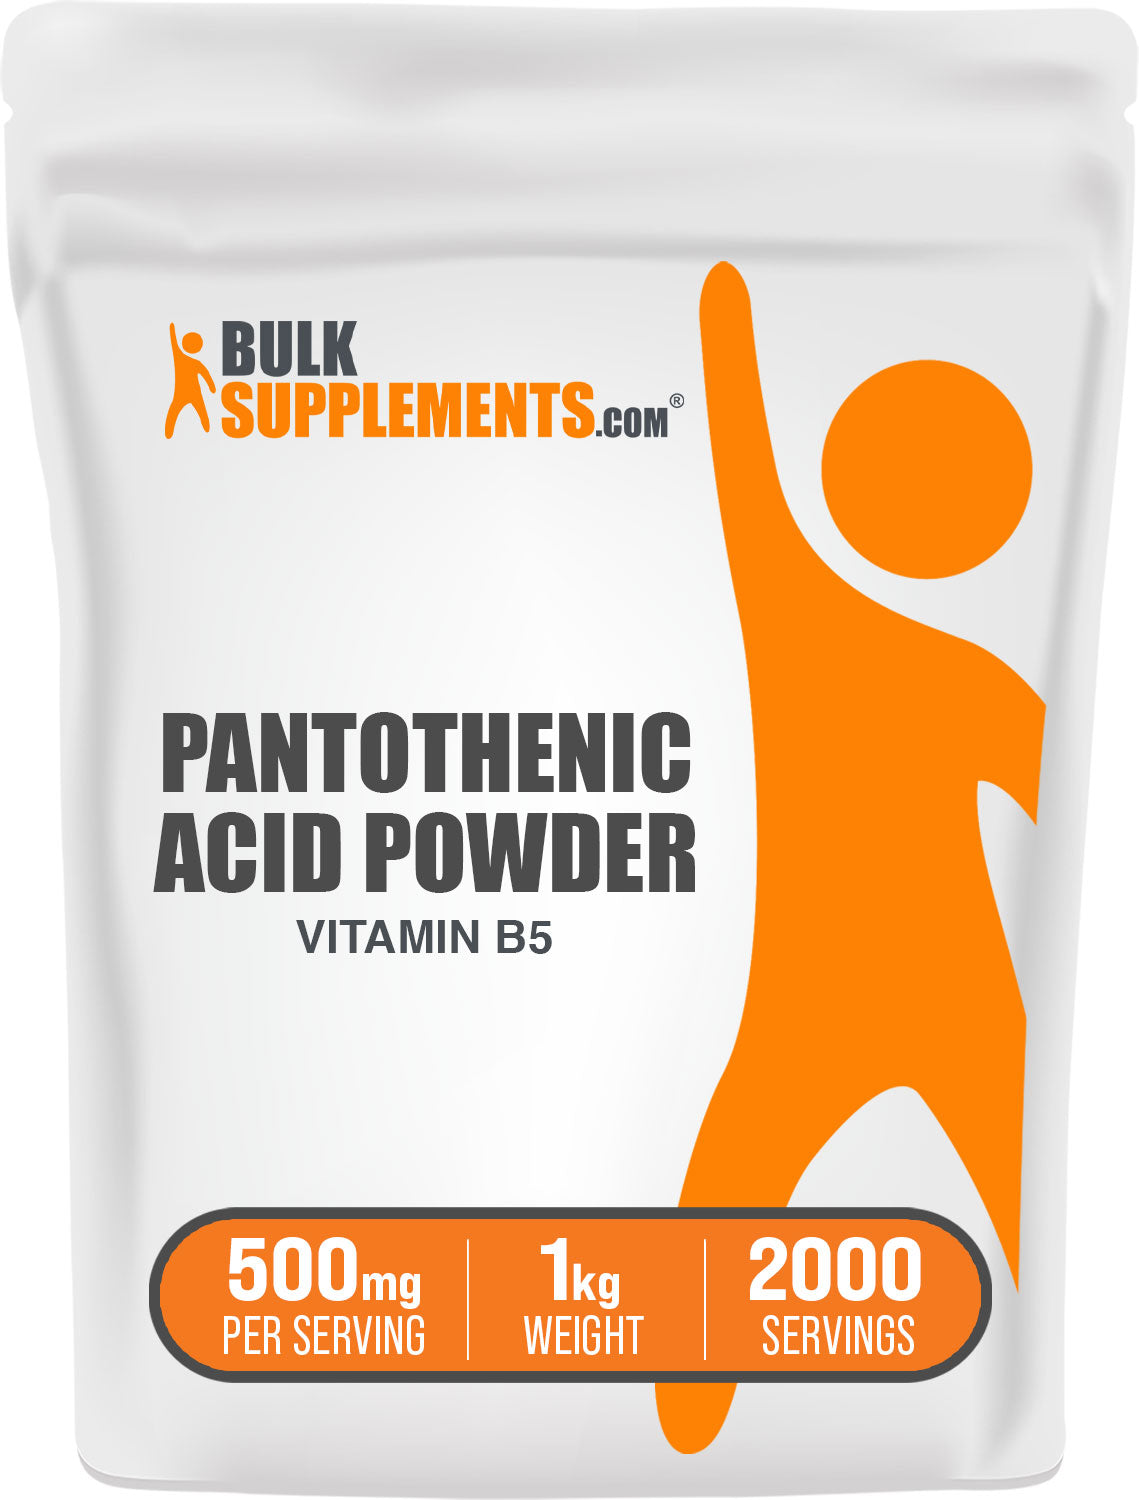 BulkSupplements Pantothenic Acid Powder Vitamin B5 1kg bag